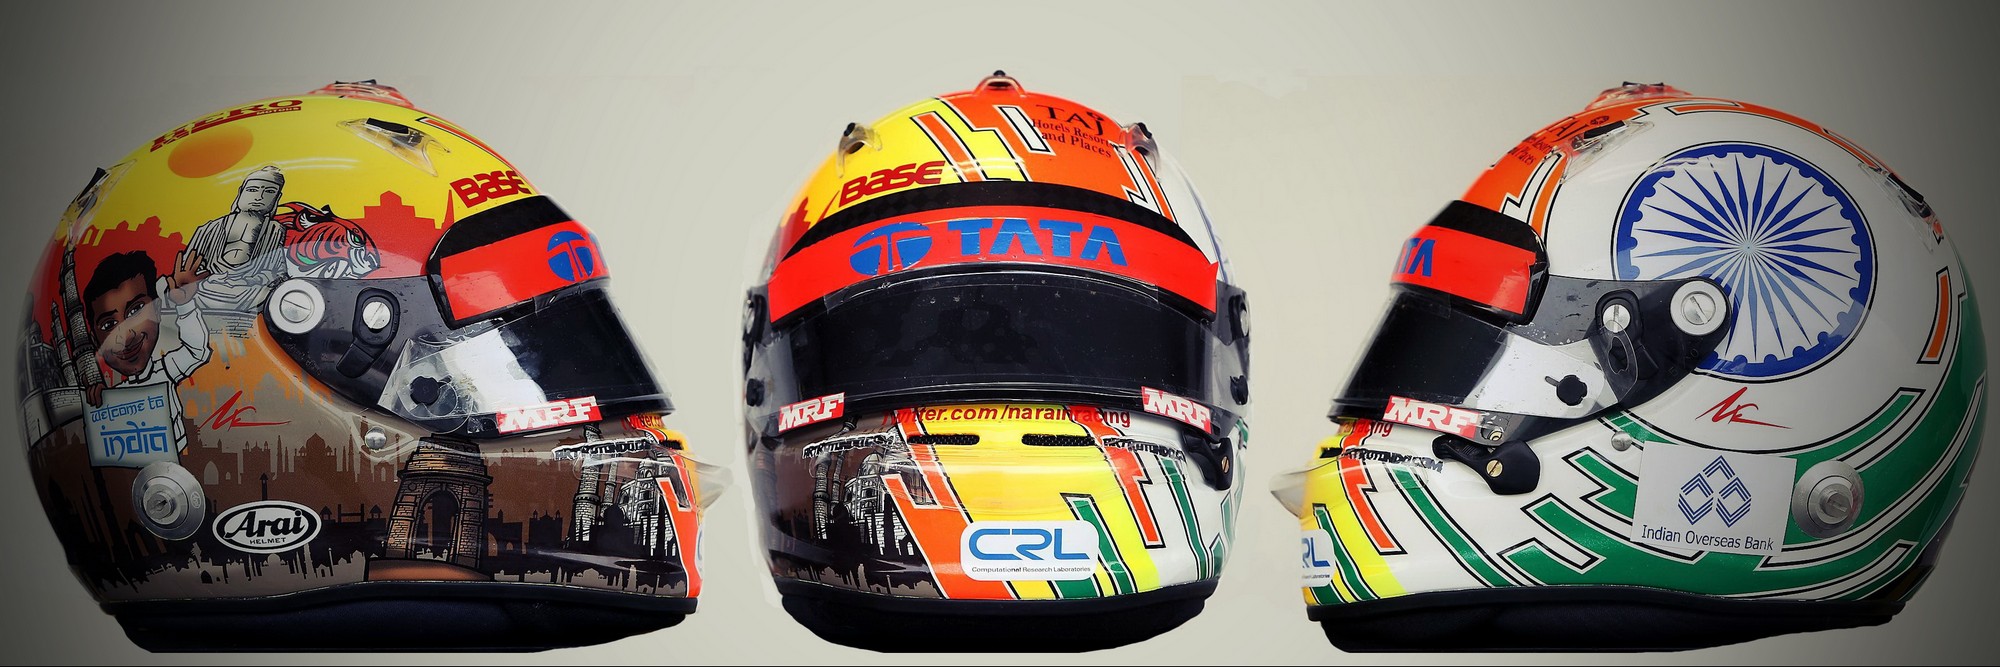 Шлем Нараина Картикеяна на Гран-При Индии 2011 года | 2011 Indian Grand Prix helmet of Narain Karthikeyan